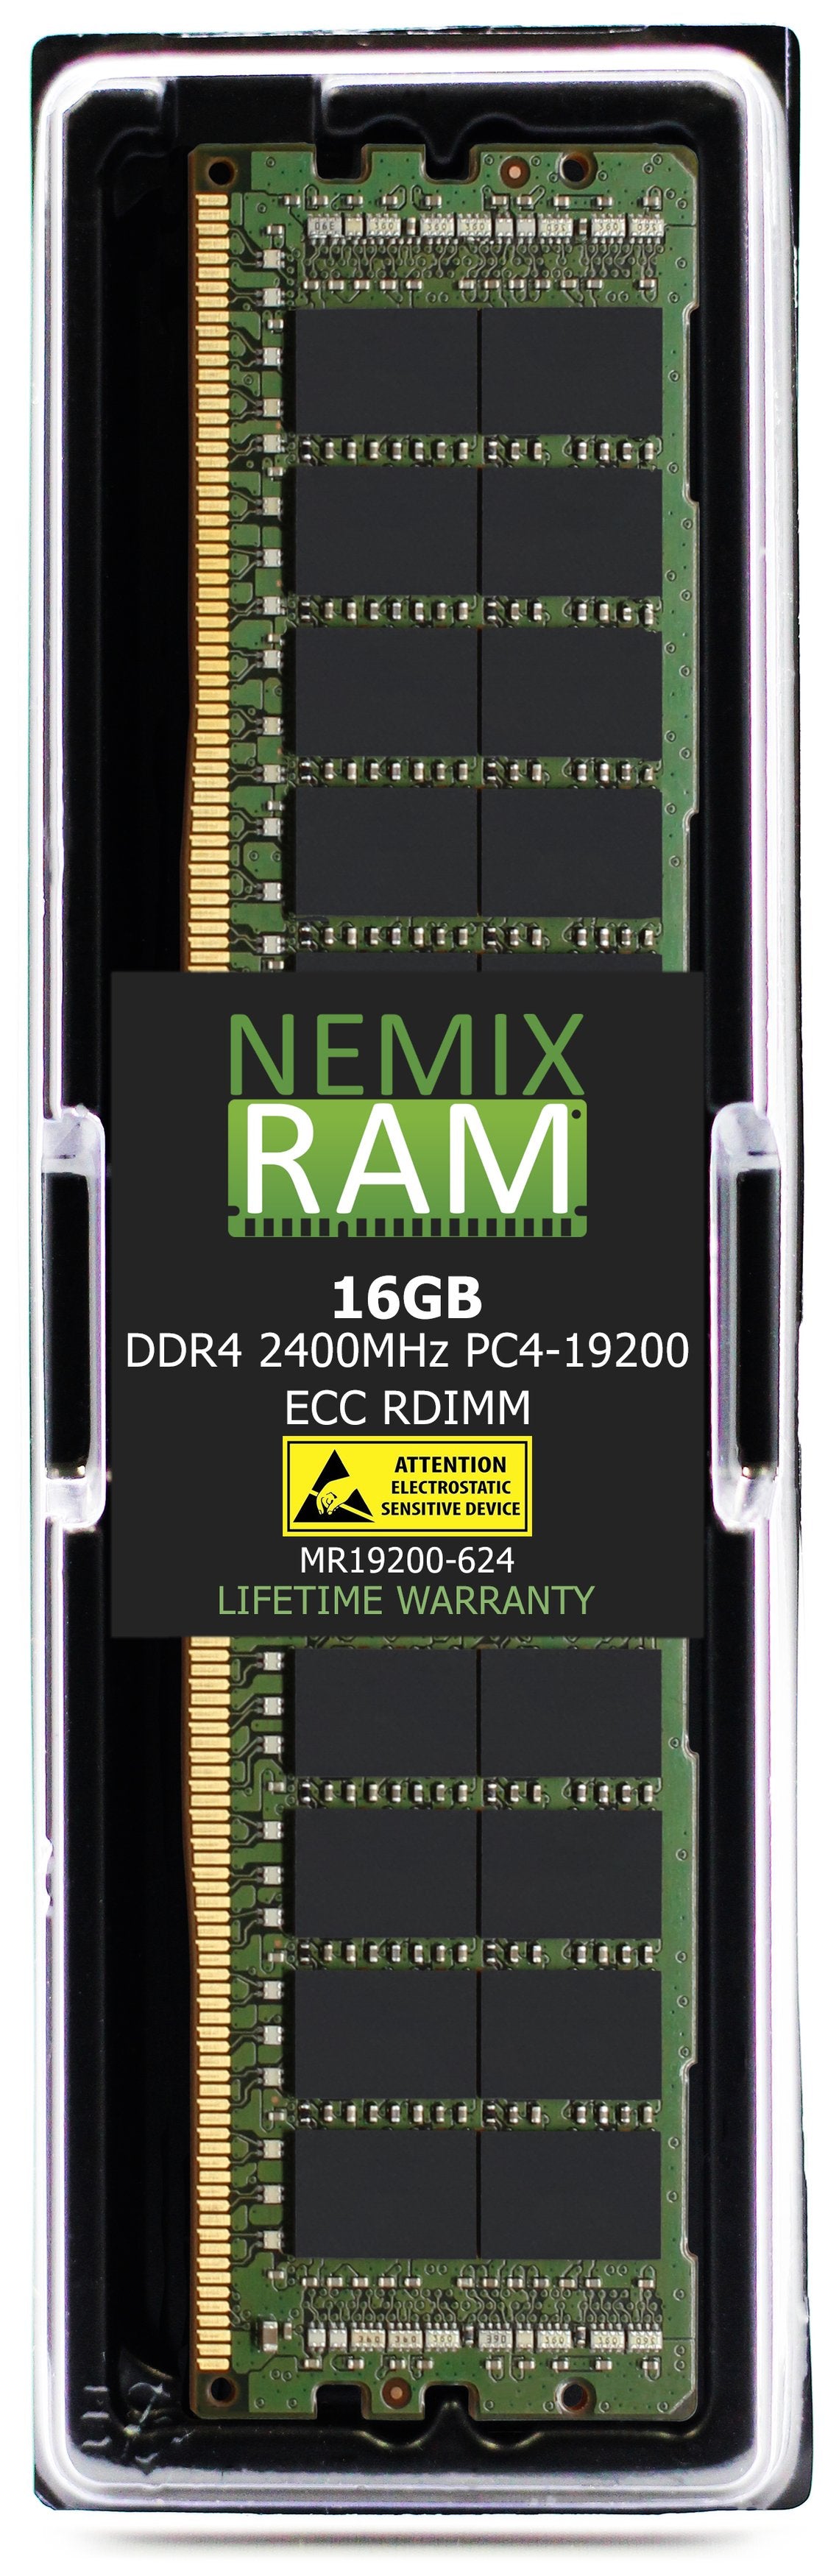 NEC Express5800 B120g Memory Module N8402-172F 16GB DDR4 2400MHZ PC4-19200 RDIMM